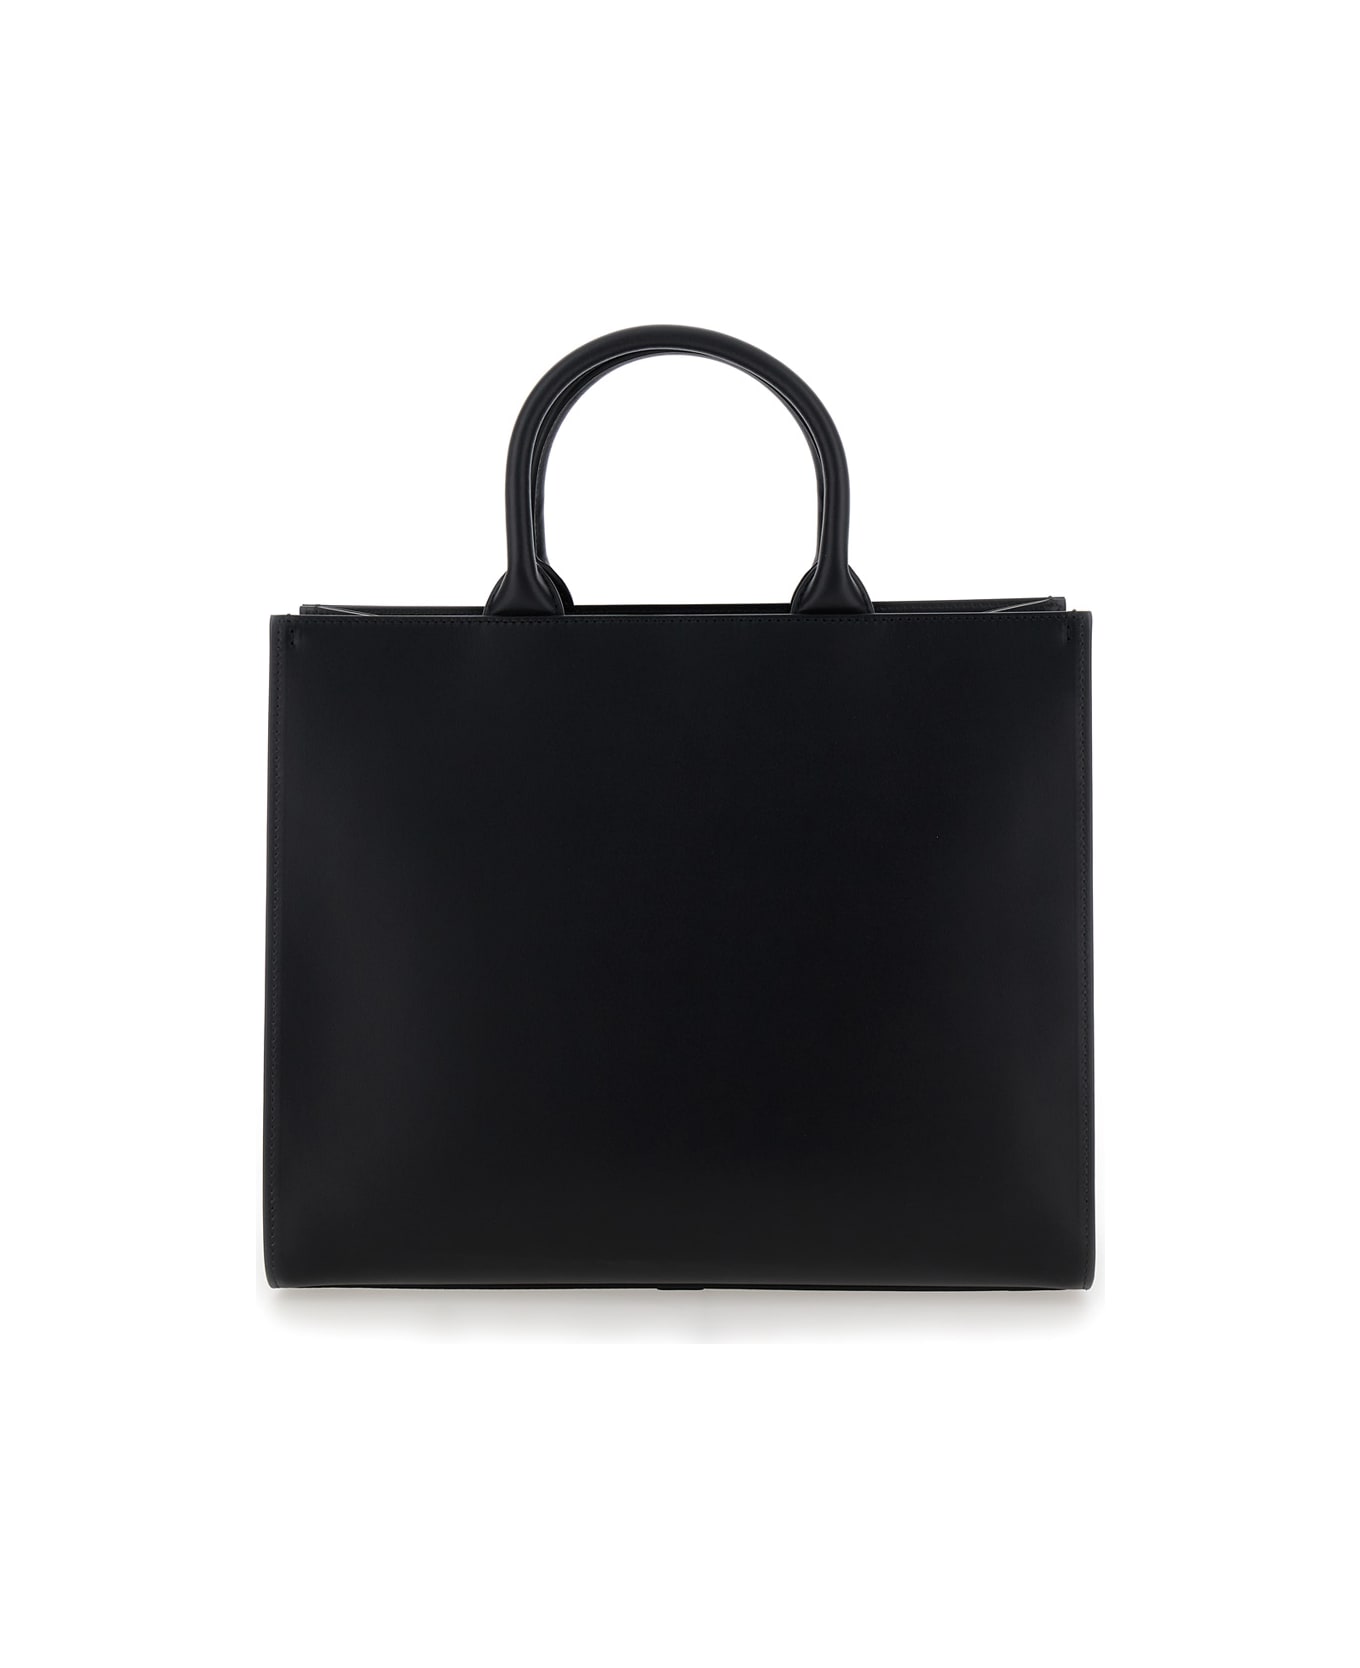 Dolce & Gabbana Black Handbag With Tonal Dg Detail In Smooth Leather Woman - Black